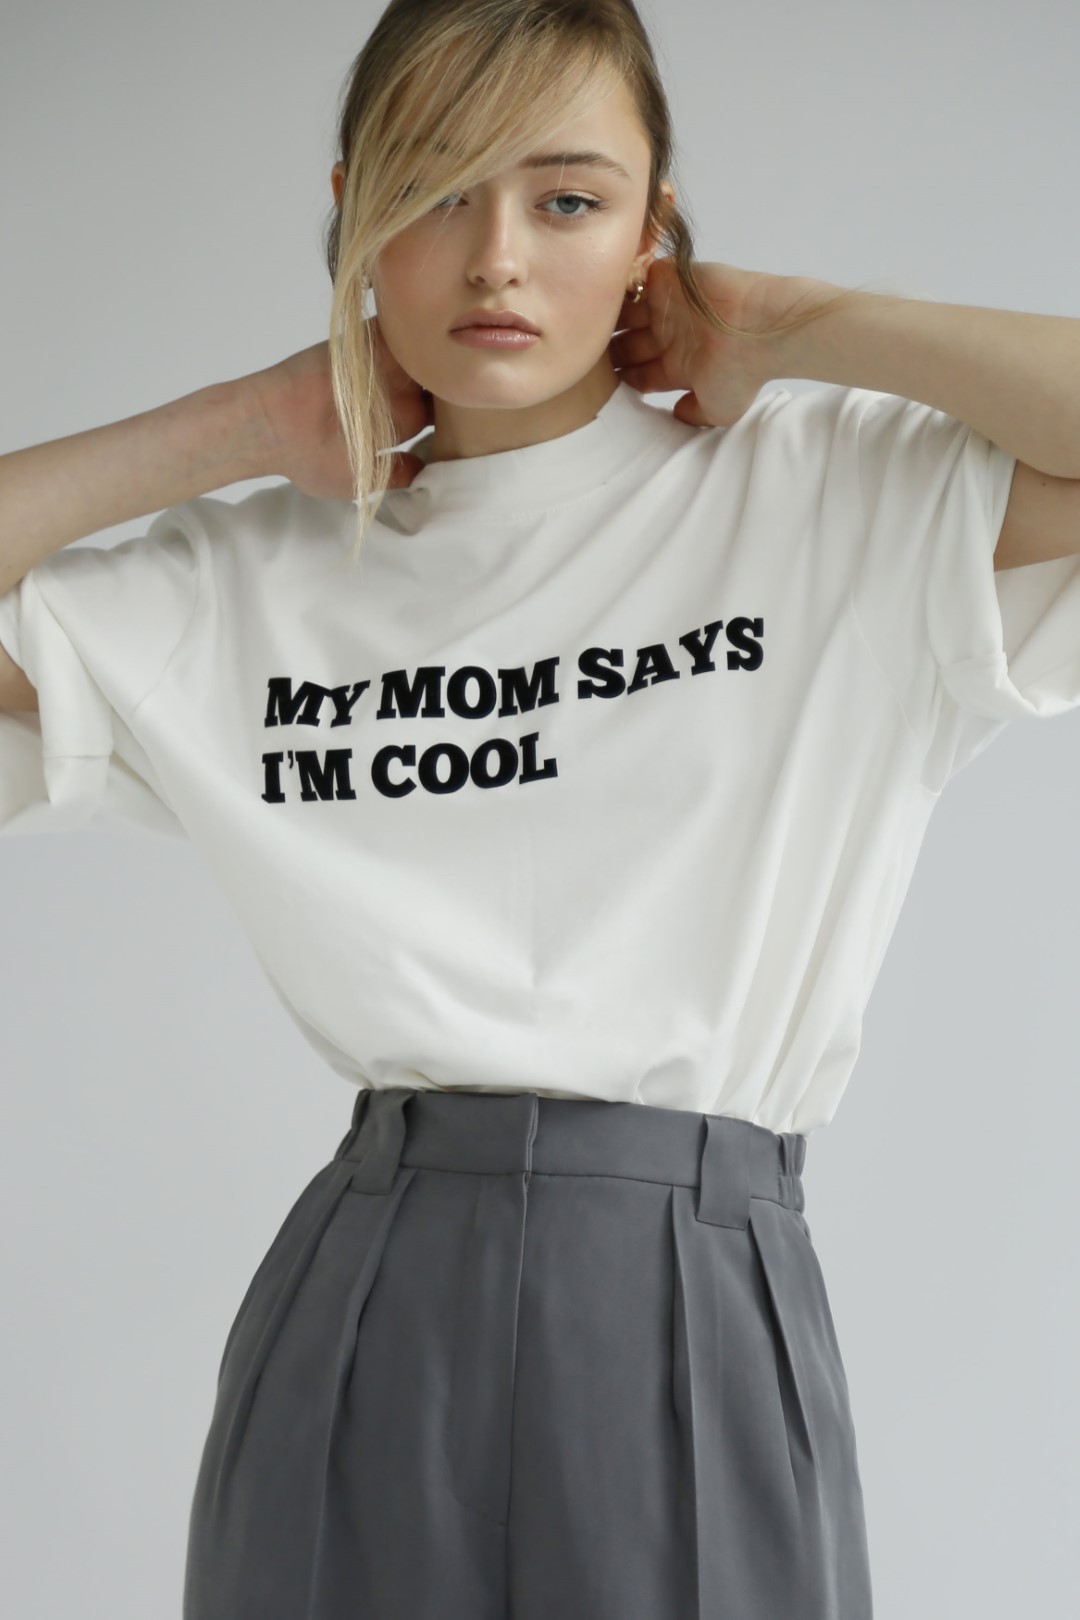 MY MOM SAYS I’M COOLe 